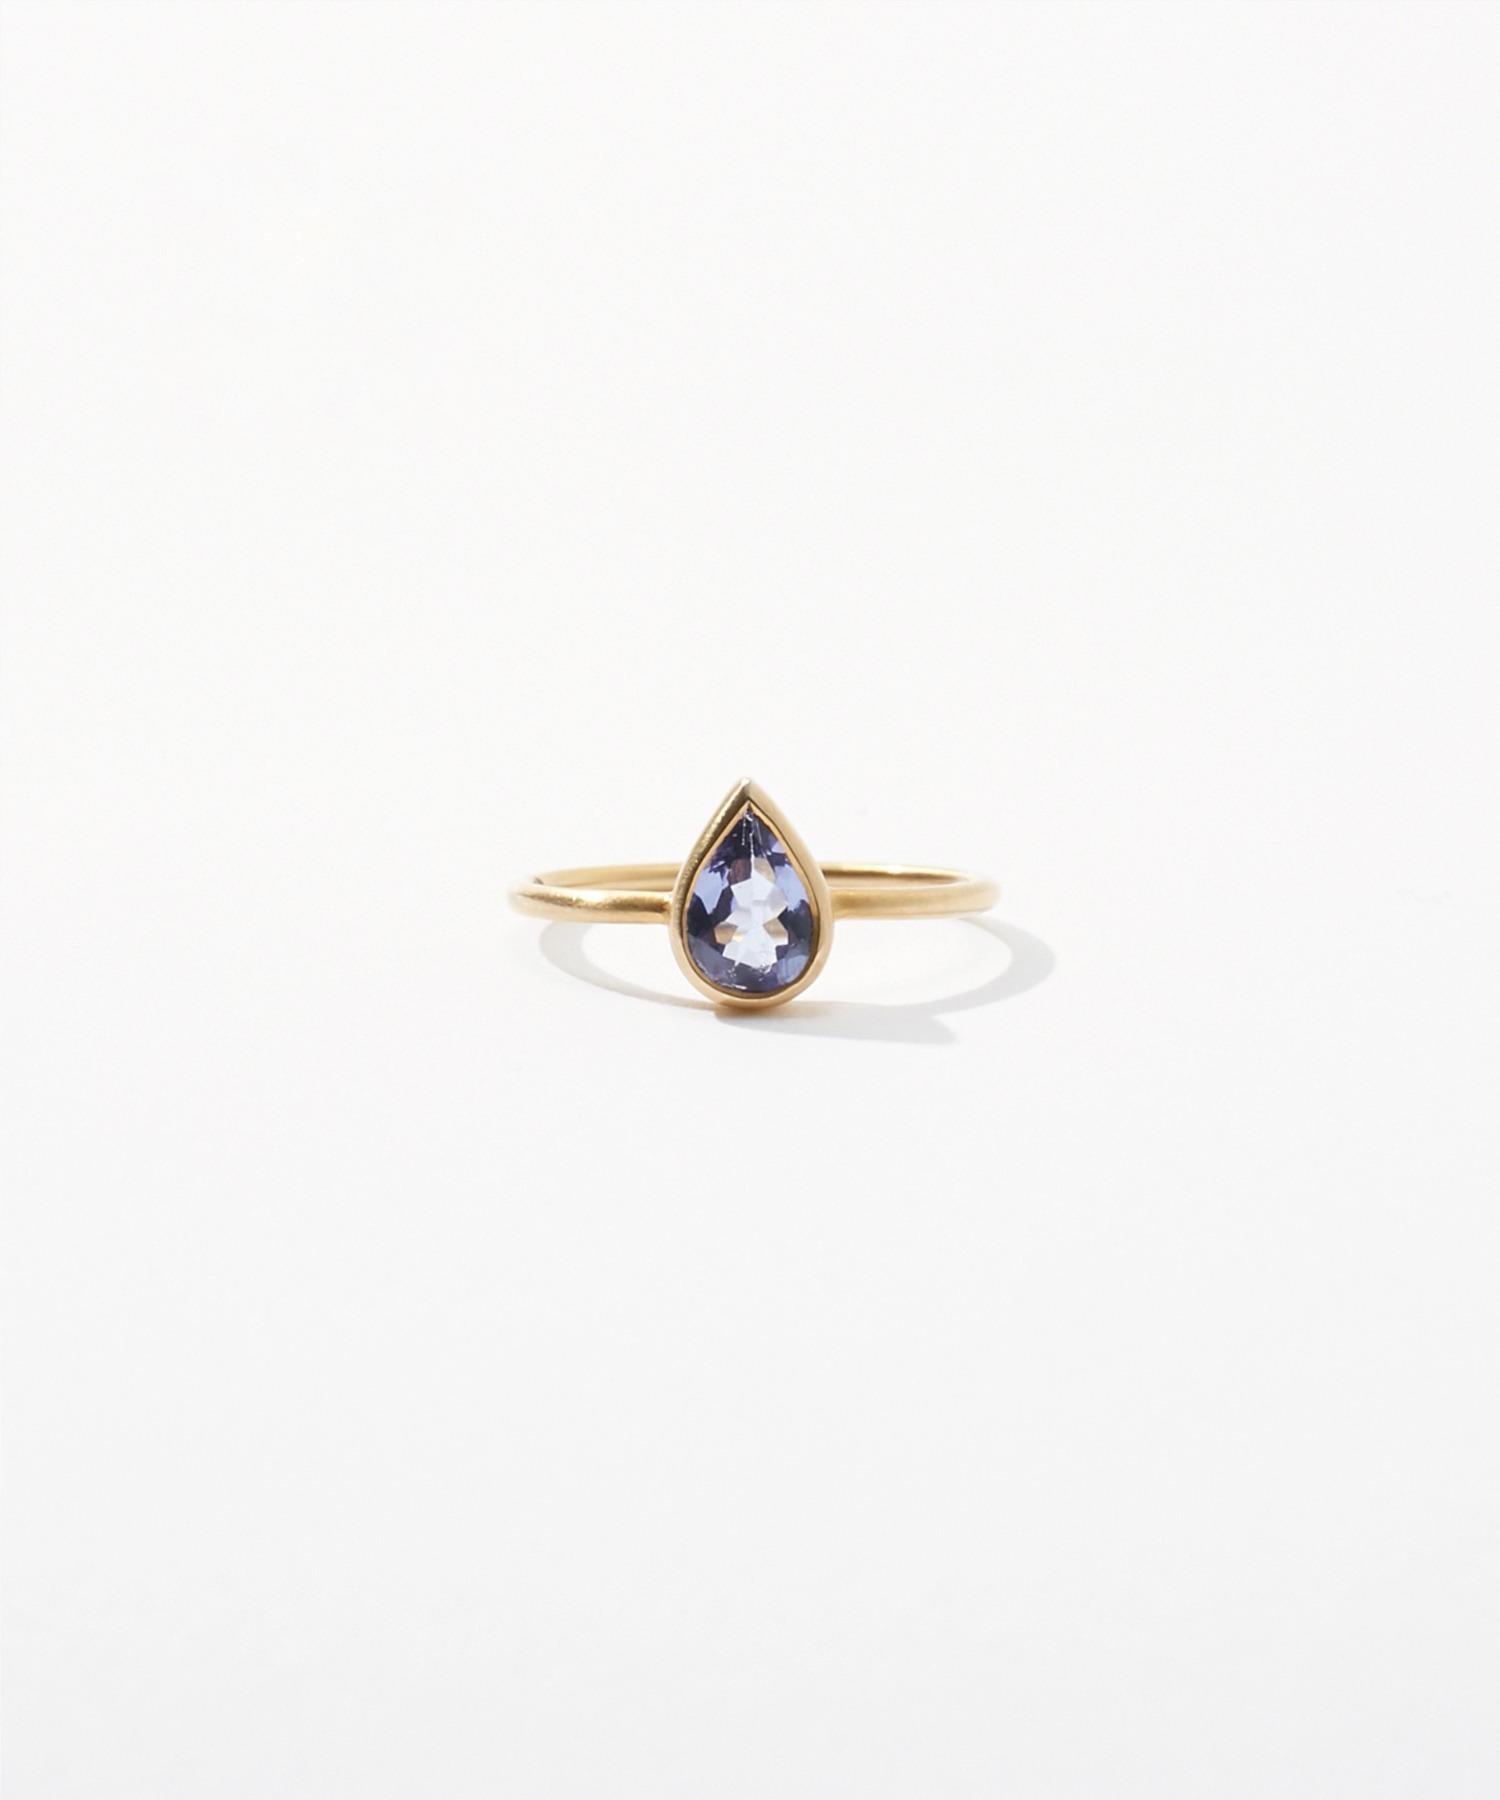 [eden] K10 pear-shaped tanzanite ring